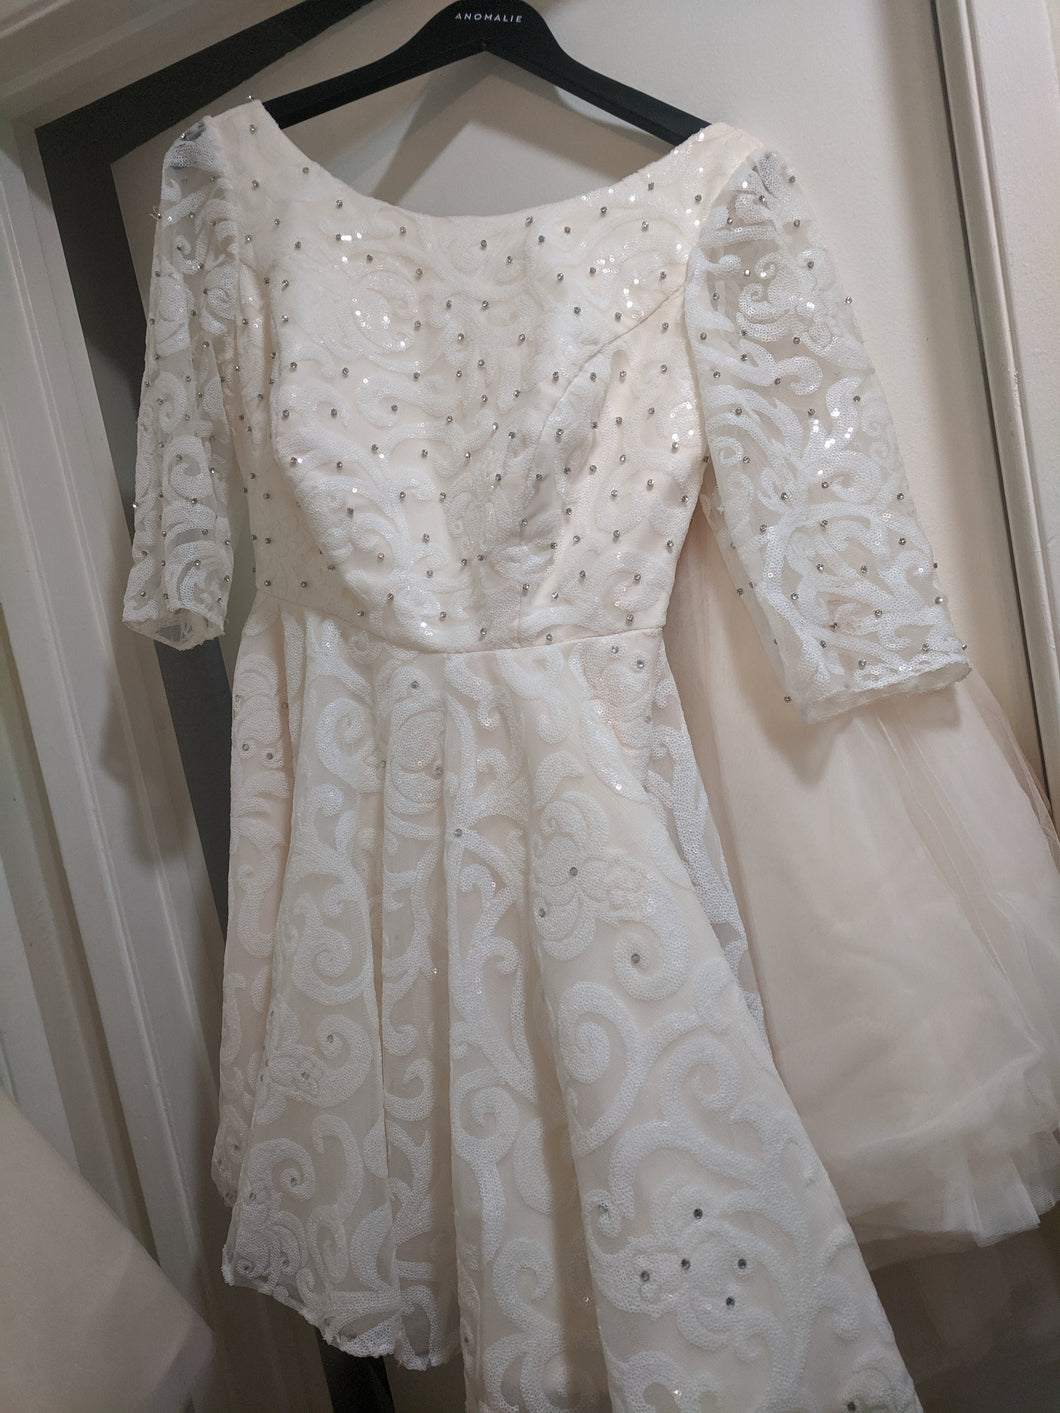 Custom 'Anomalie' size 10 used wedding dress front view on hanger